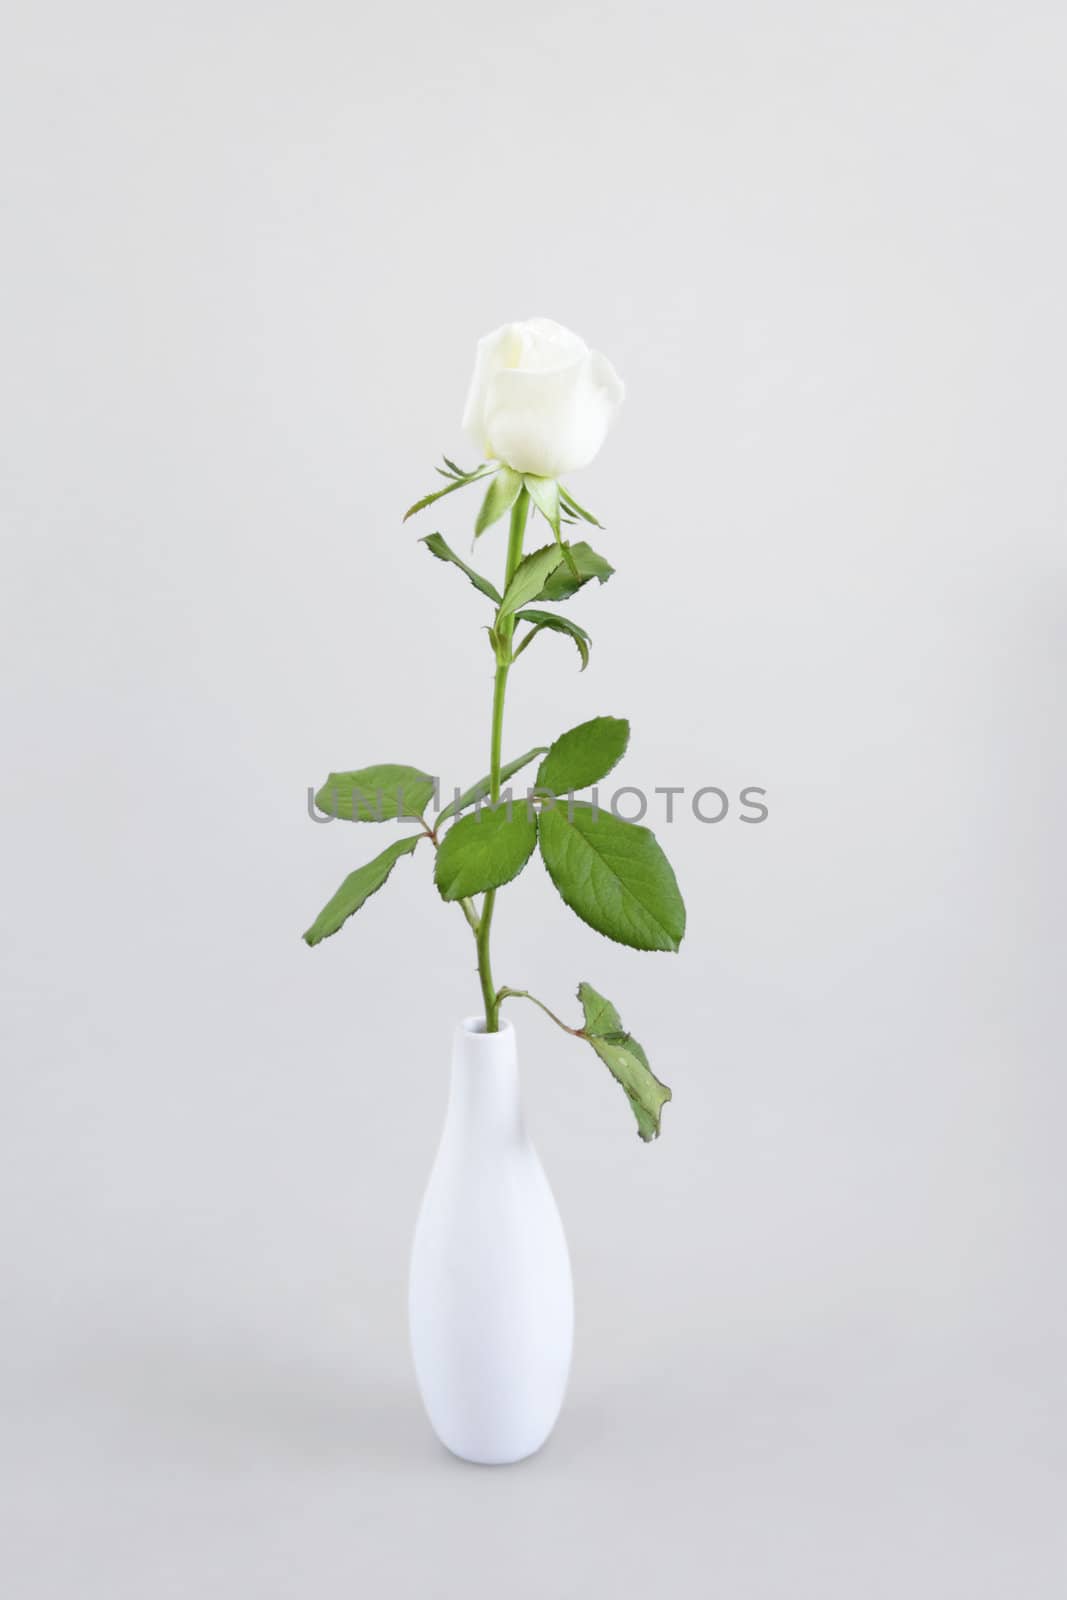 gentle cream rose on a light background